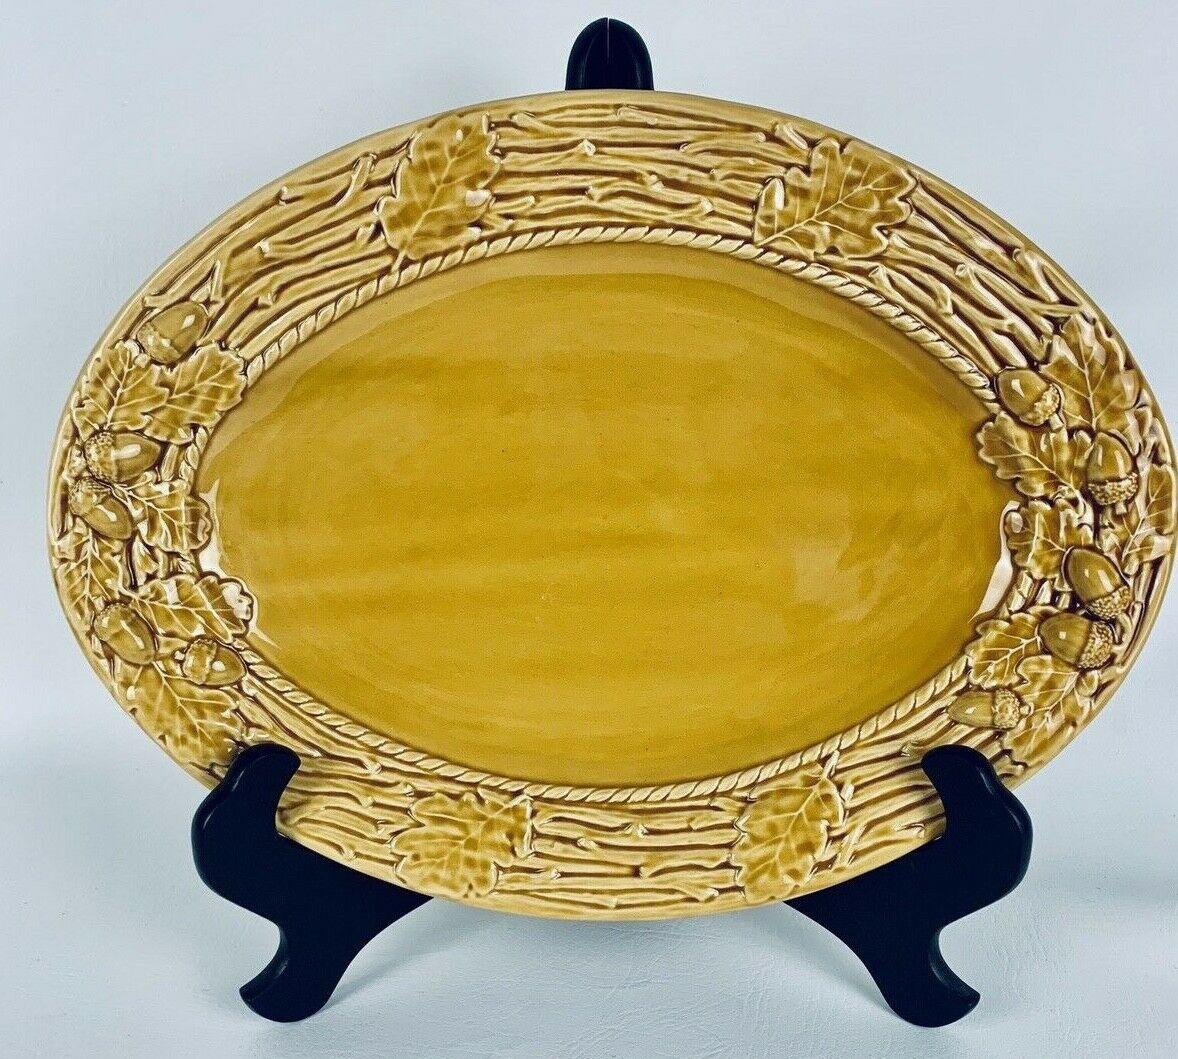 Bordallo Pinheiro Portugal Gold Acorn Oval Embossed Service Oval Platter 15 1/2"